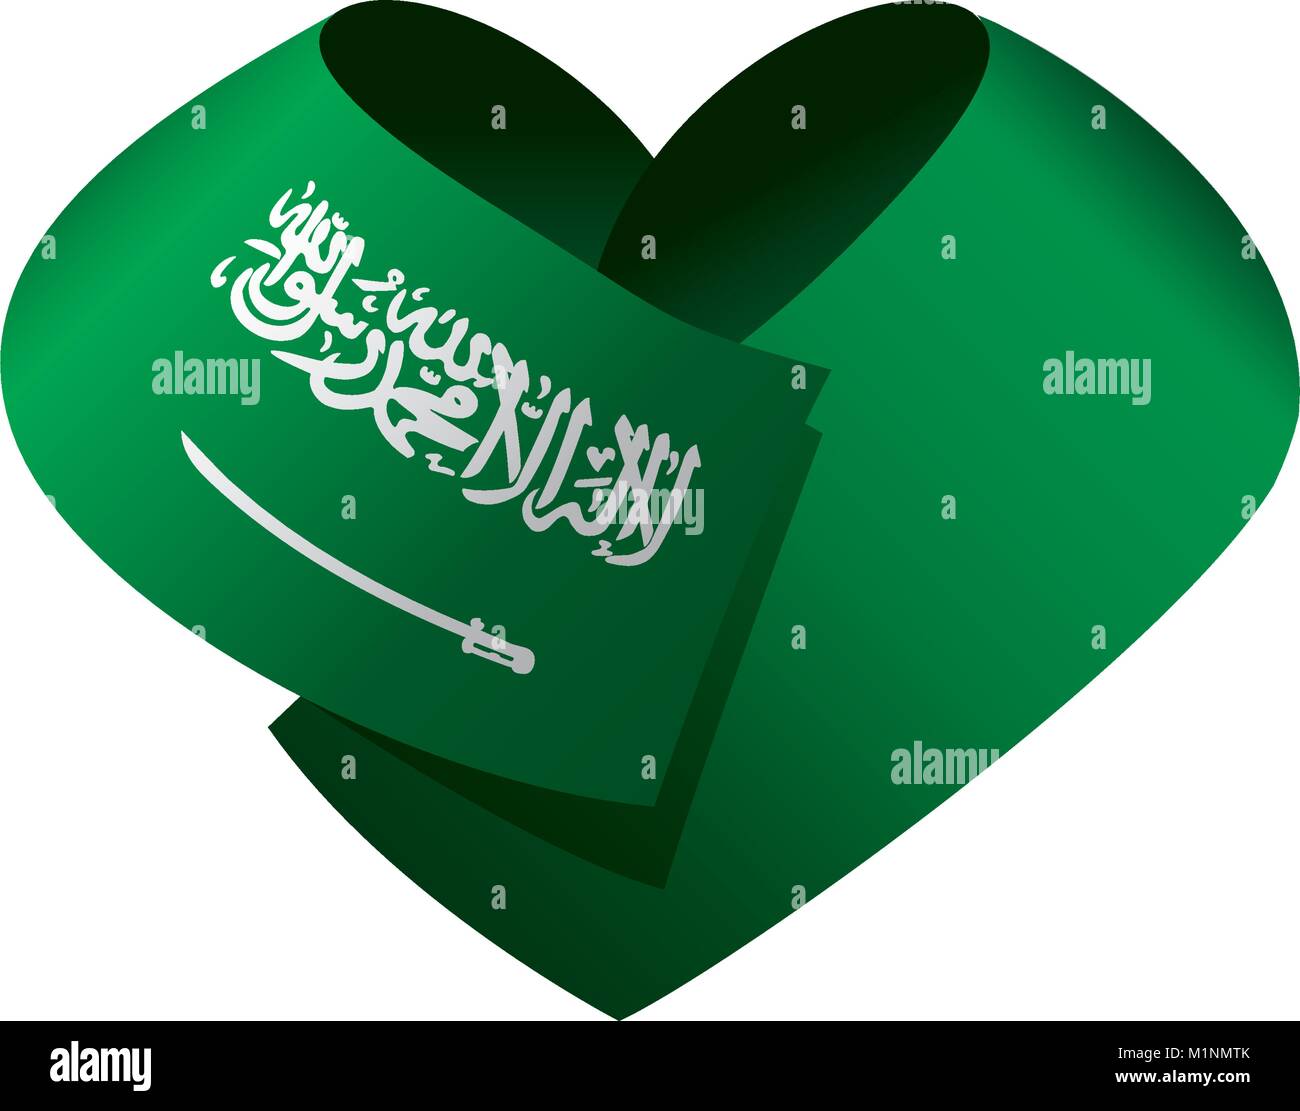 Saudi Arabia flag, vector illustration Stock Vector